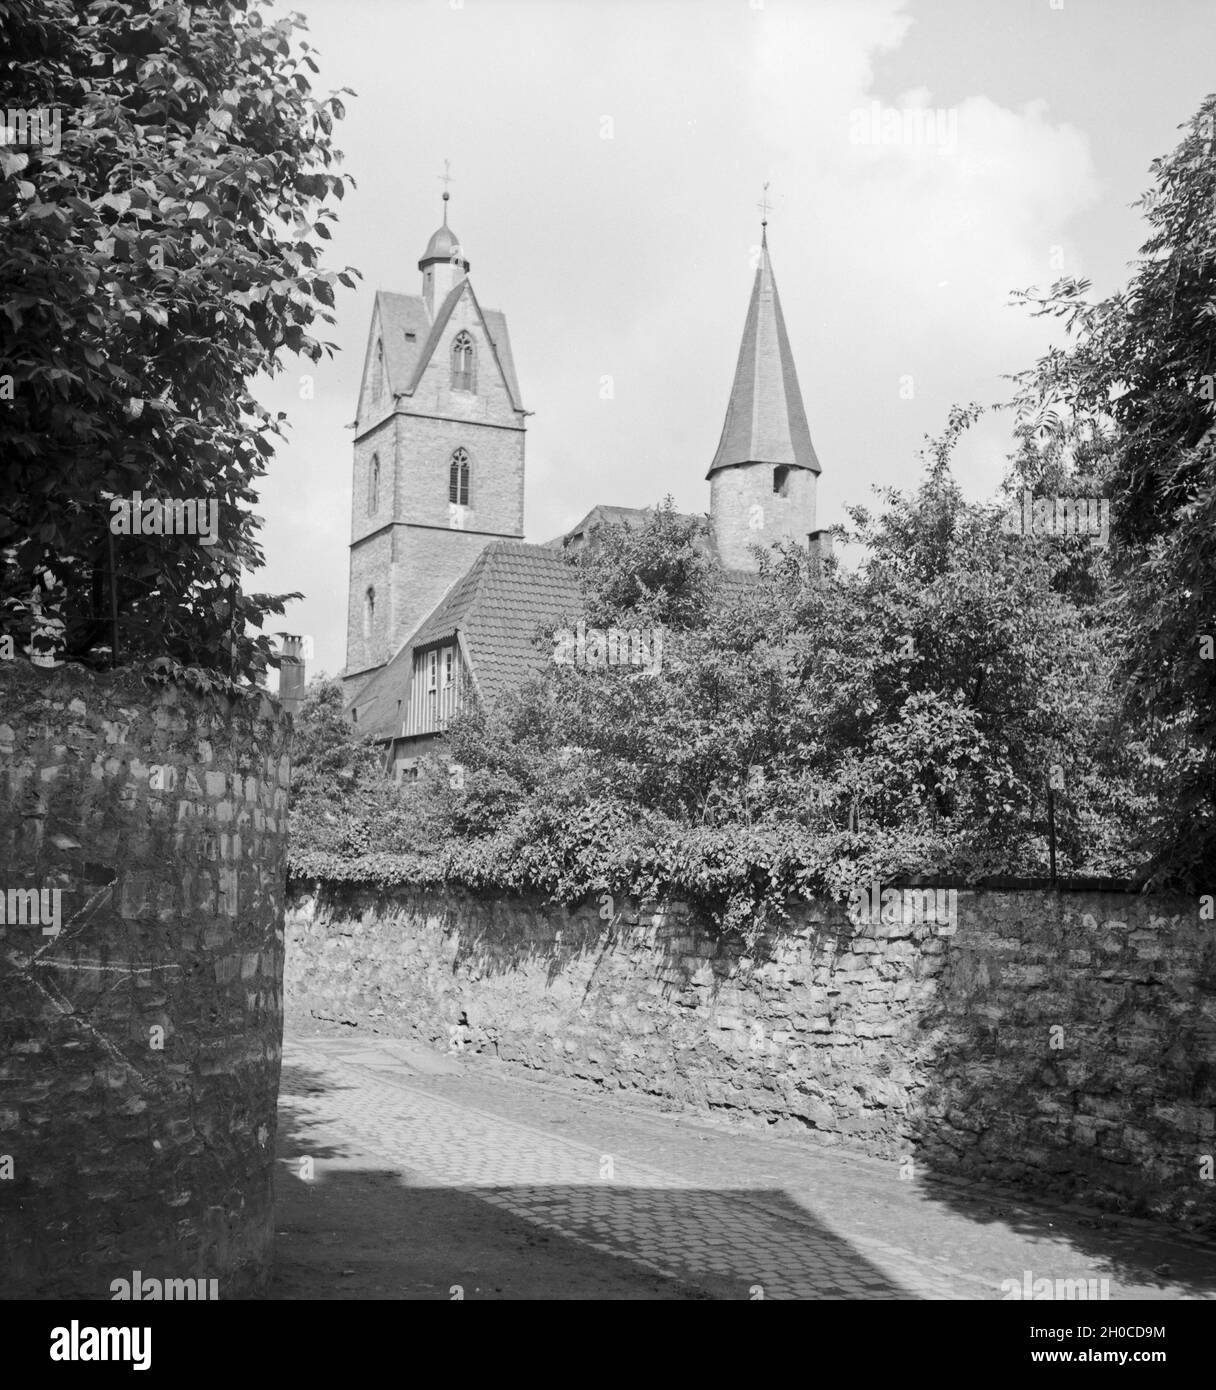 Blick auf die Busdorfkirche à Paderborn, Deutschland 1930 er Jahre. Vue de l'église à Busdorfkirche Paderborn, Allemagne 1930. Banque D'Images